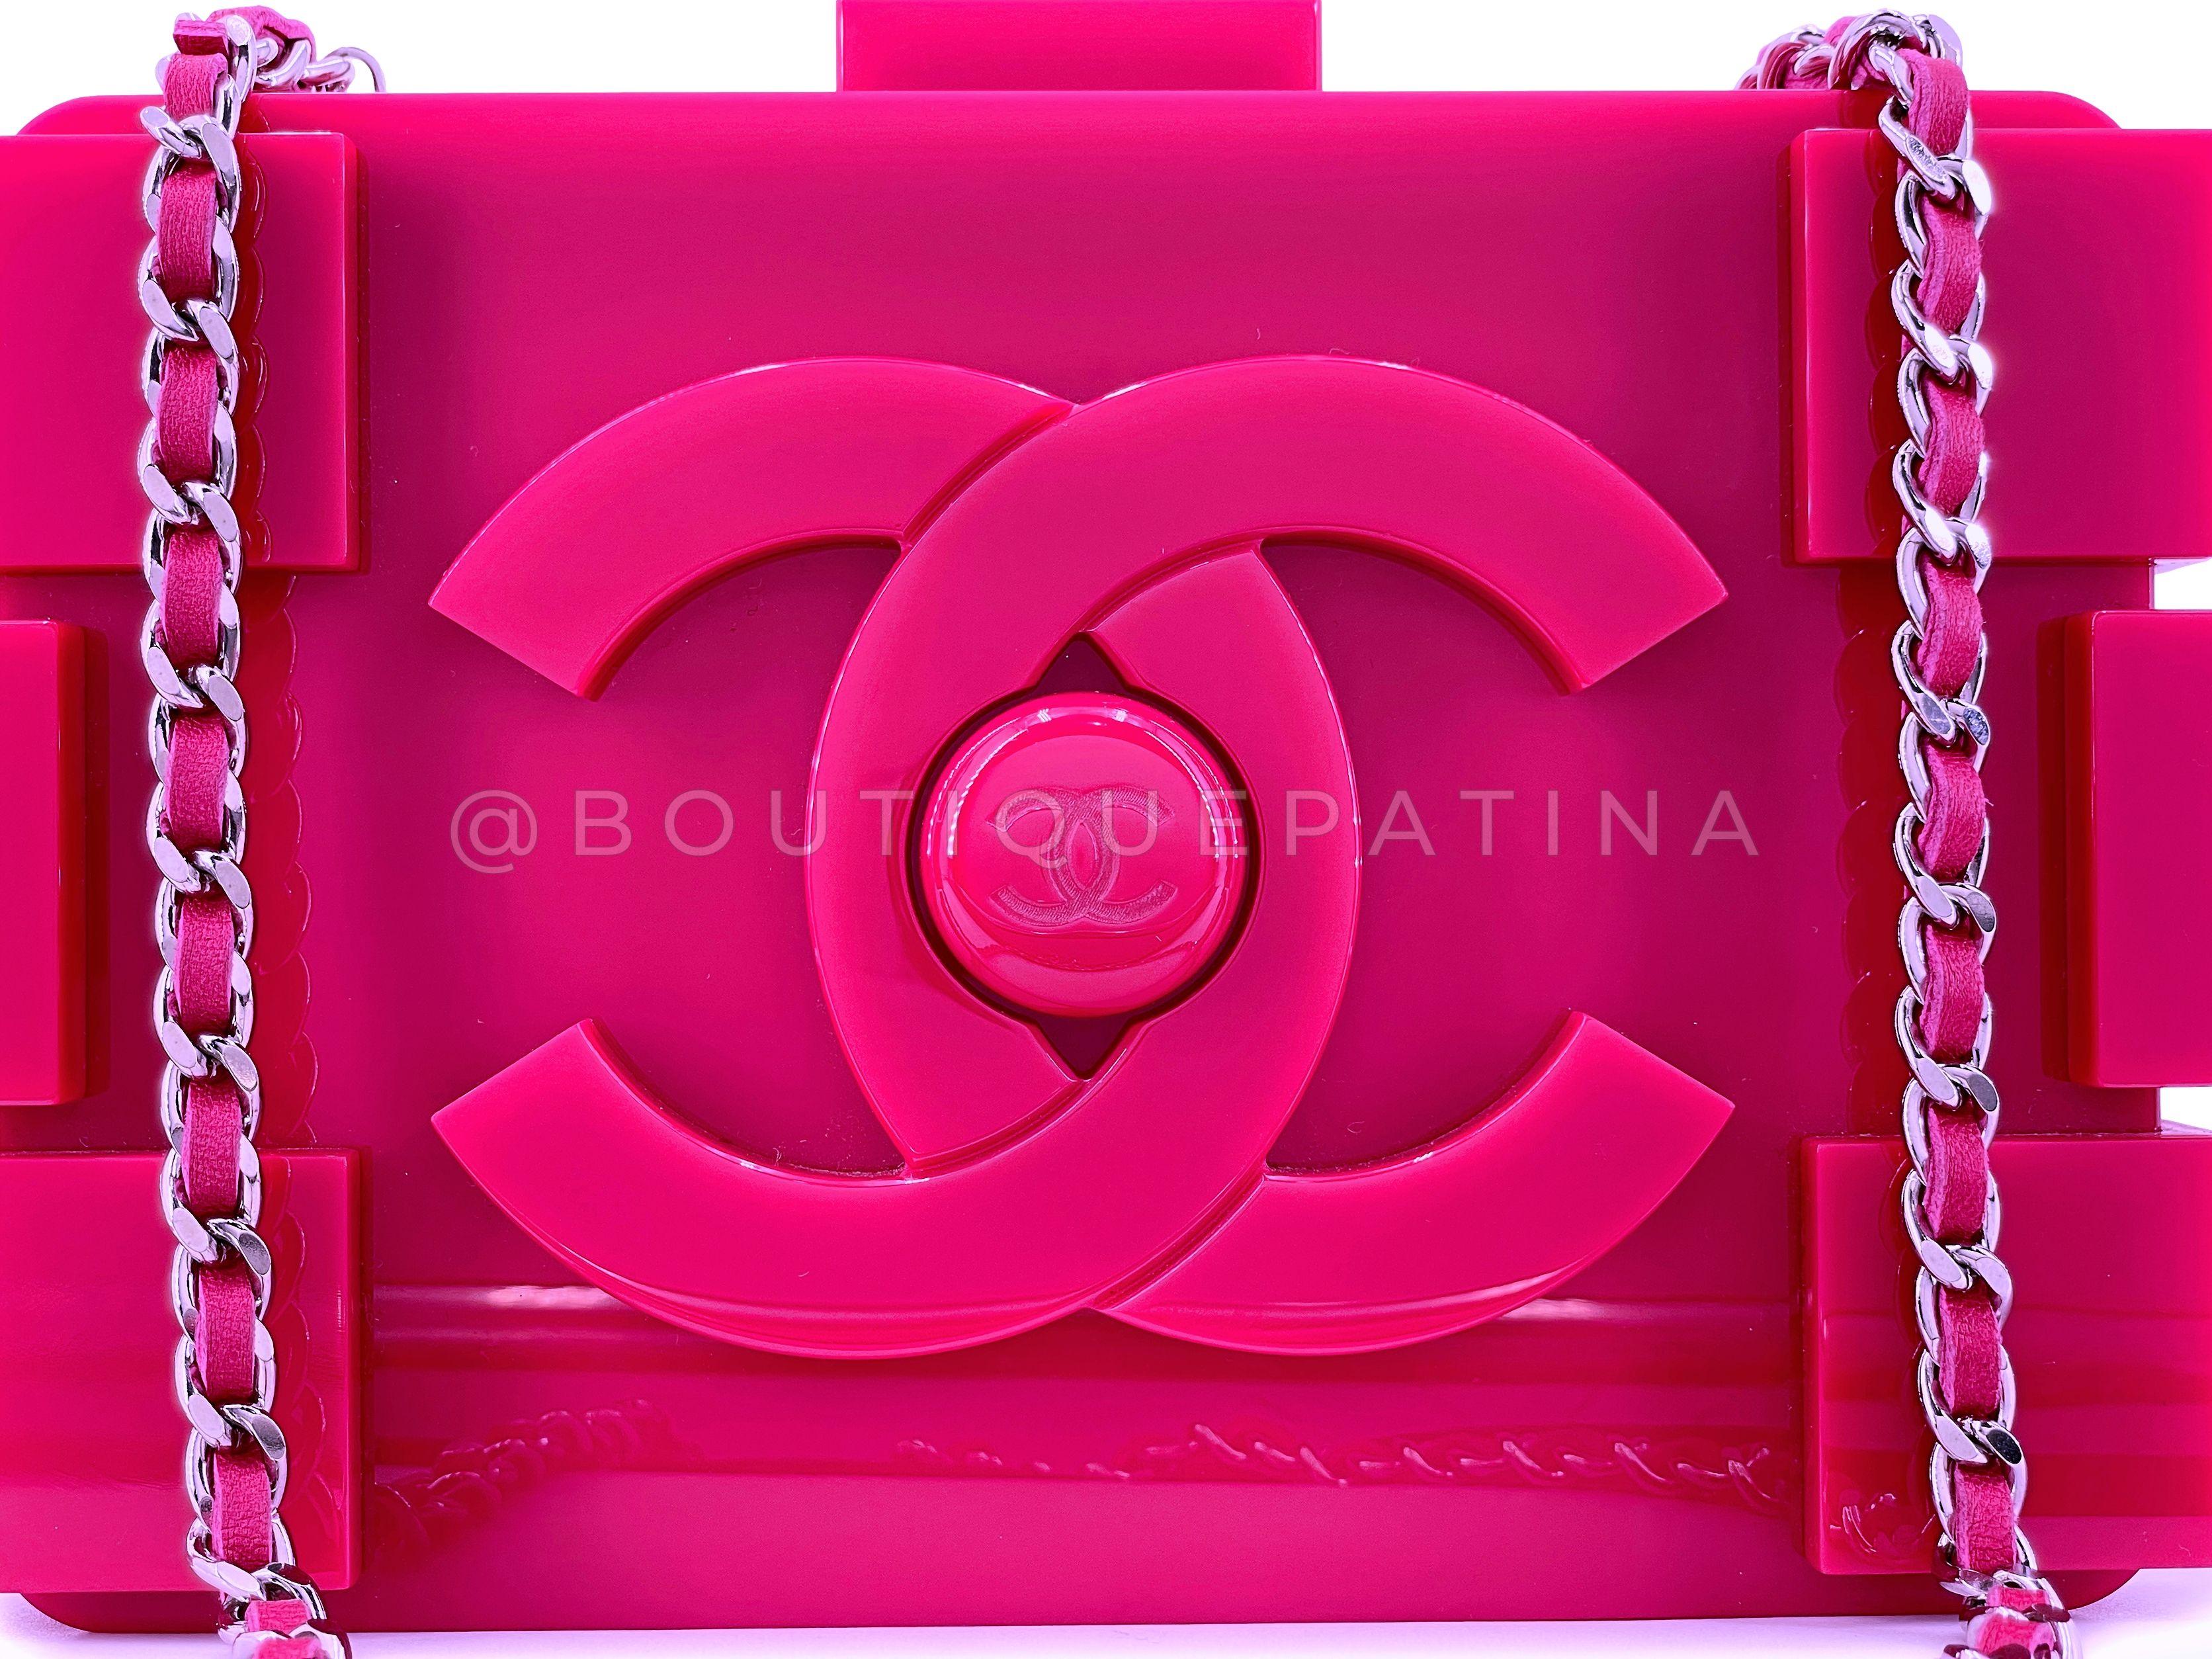 Chanel 2014 Pink Lego Brick Minaudière Plexiglass Clutch Shoulder Bag RHW 67522 For Sale 3